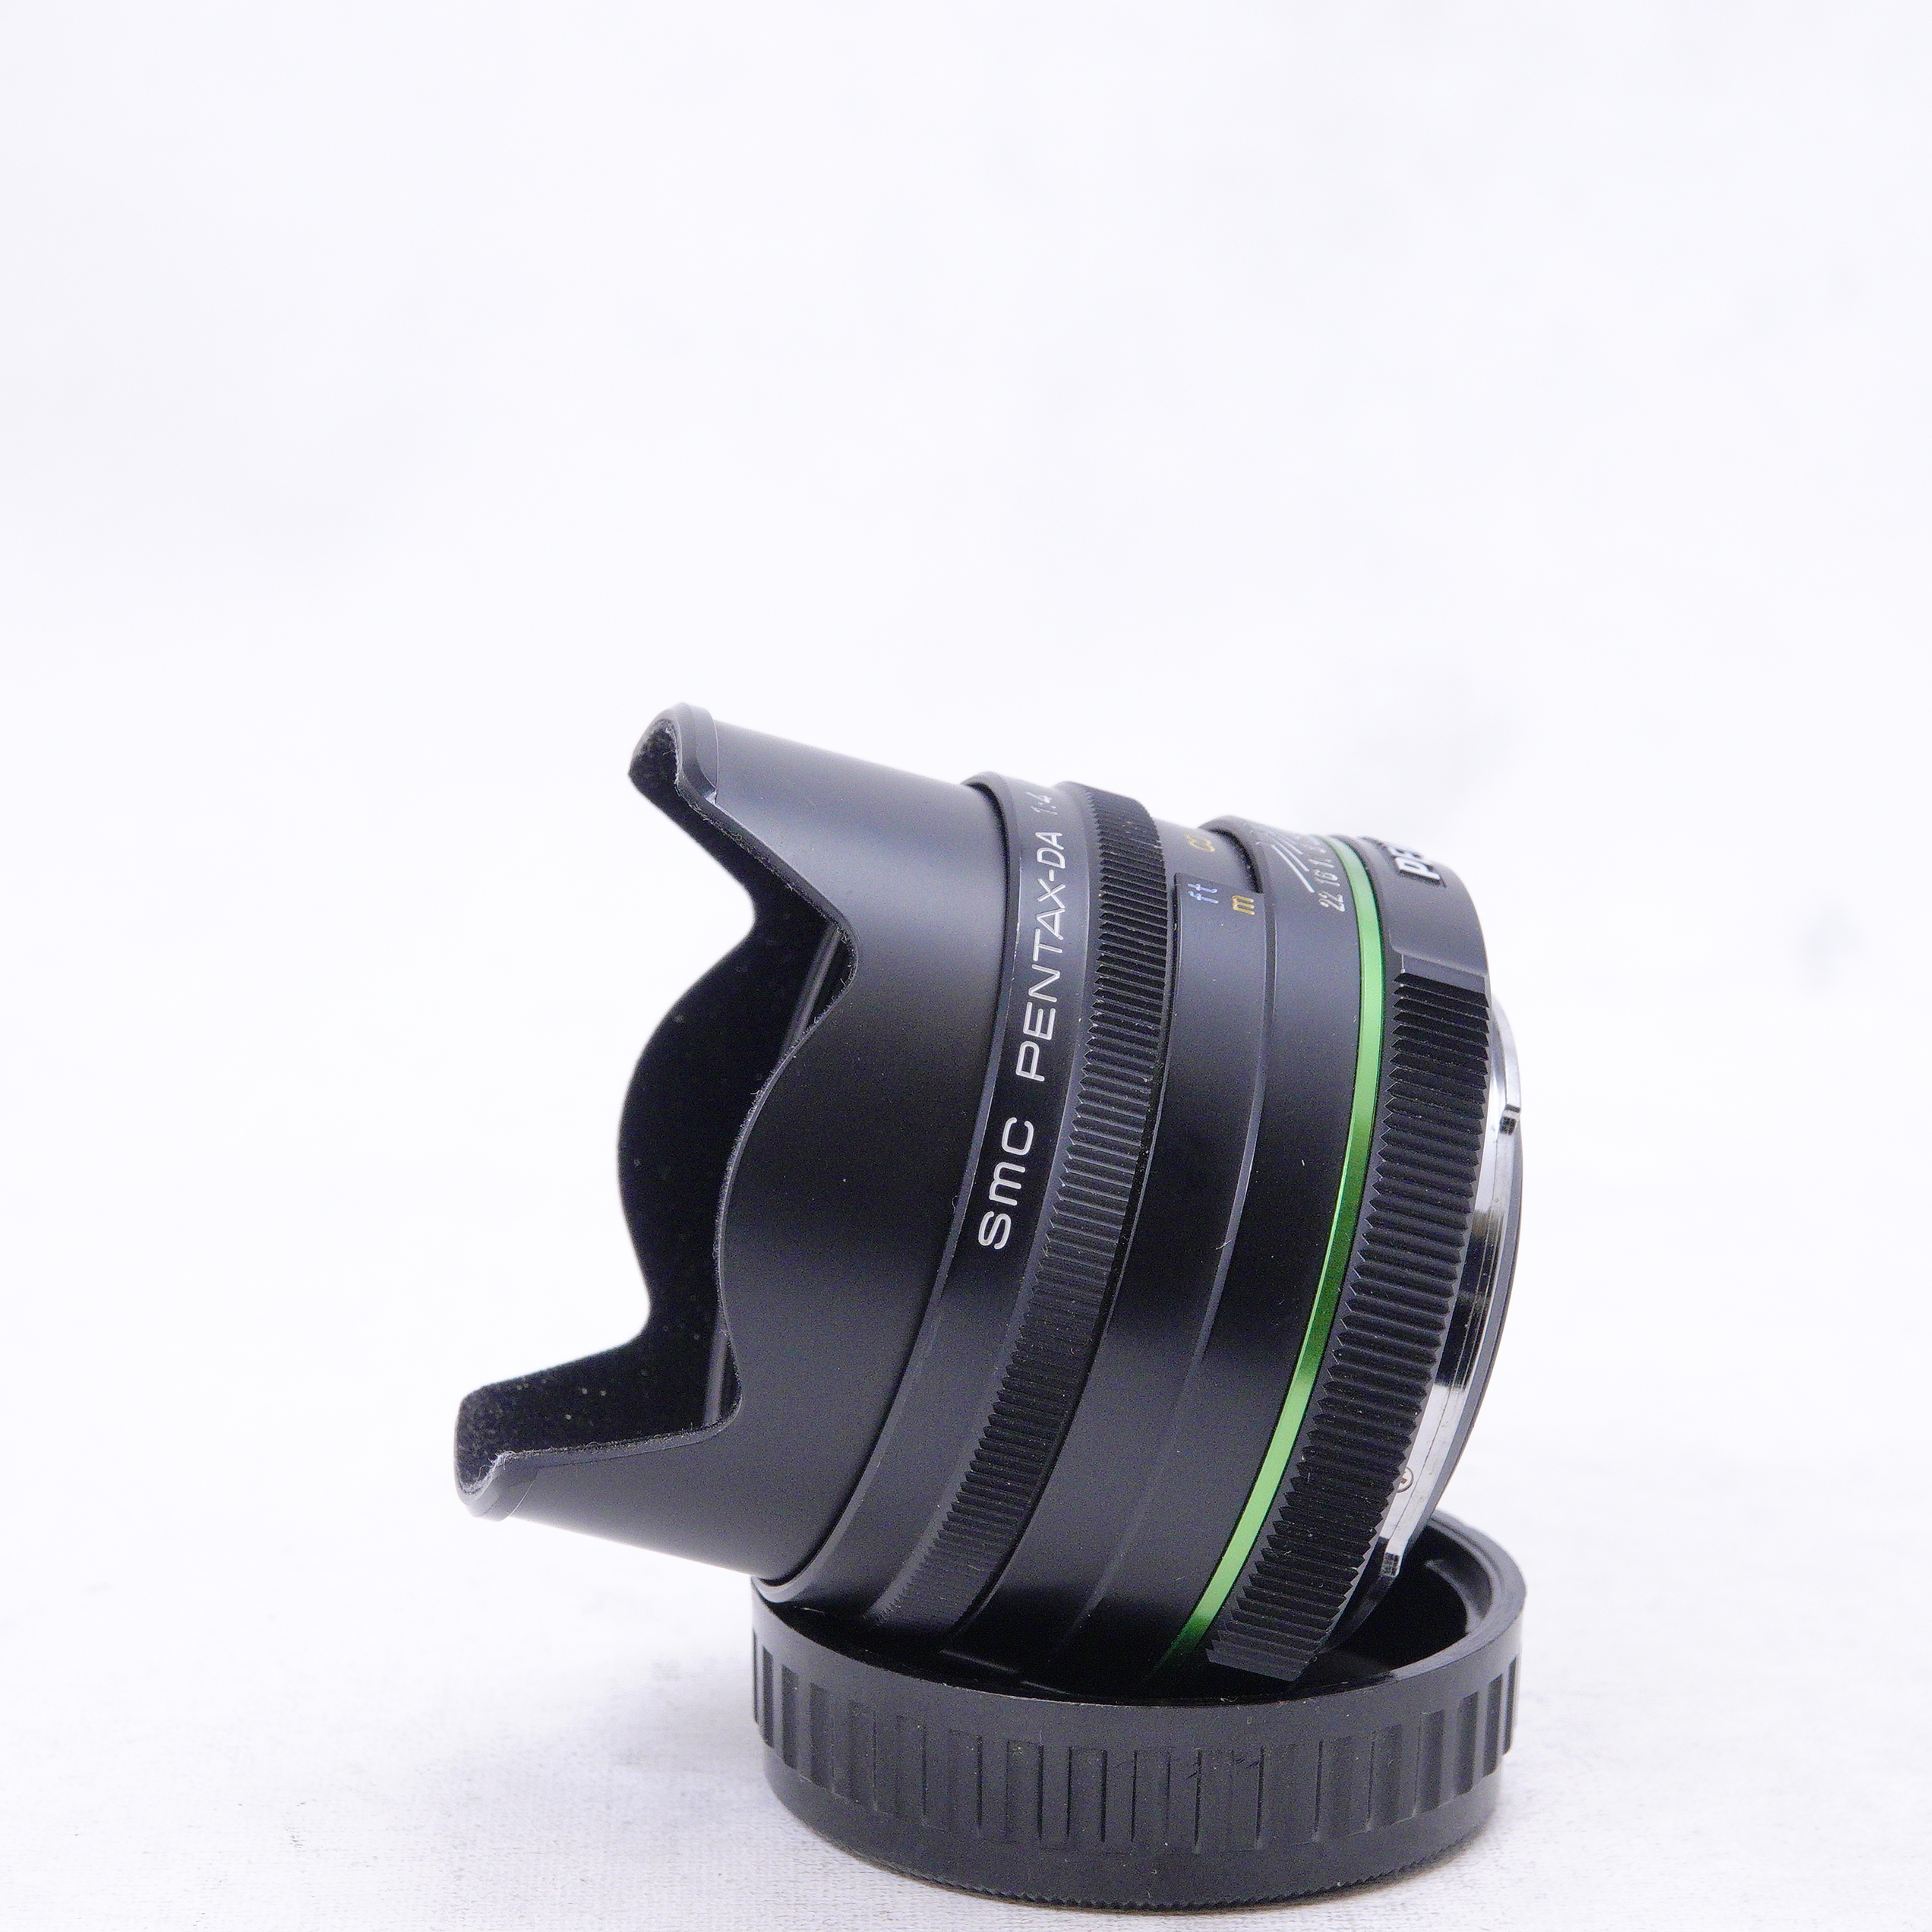 Pentax SMC-DA 15mm f/4 AL ED Limited - Usado